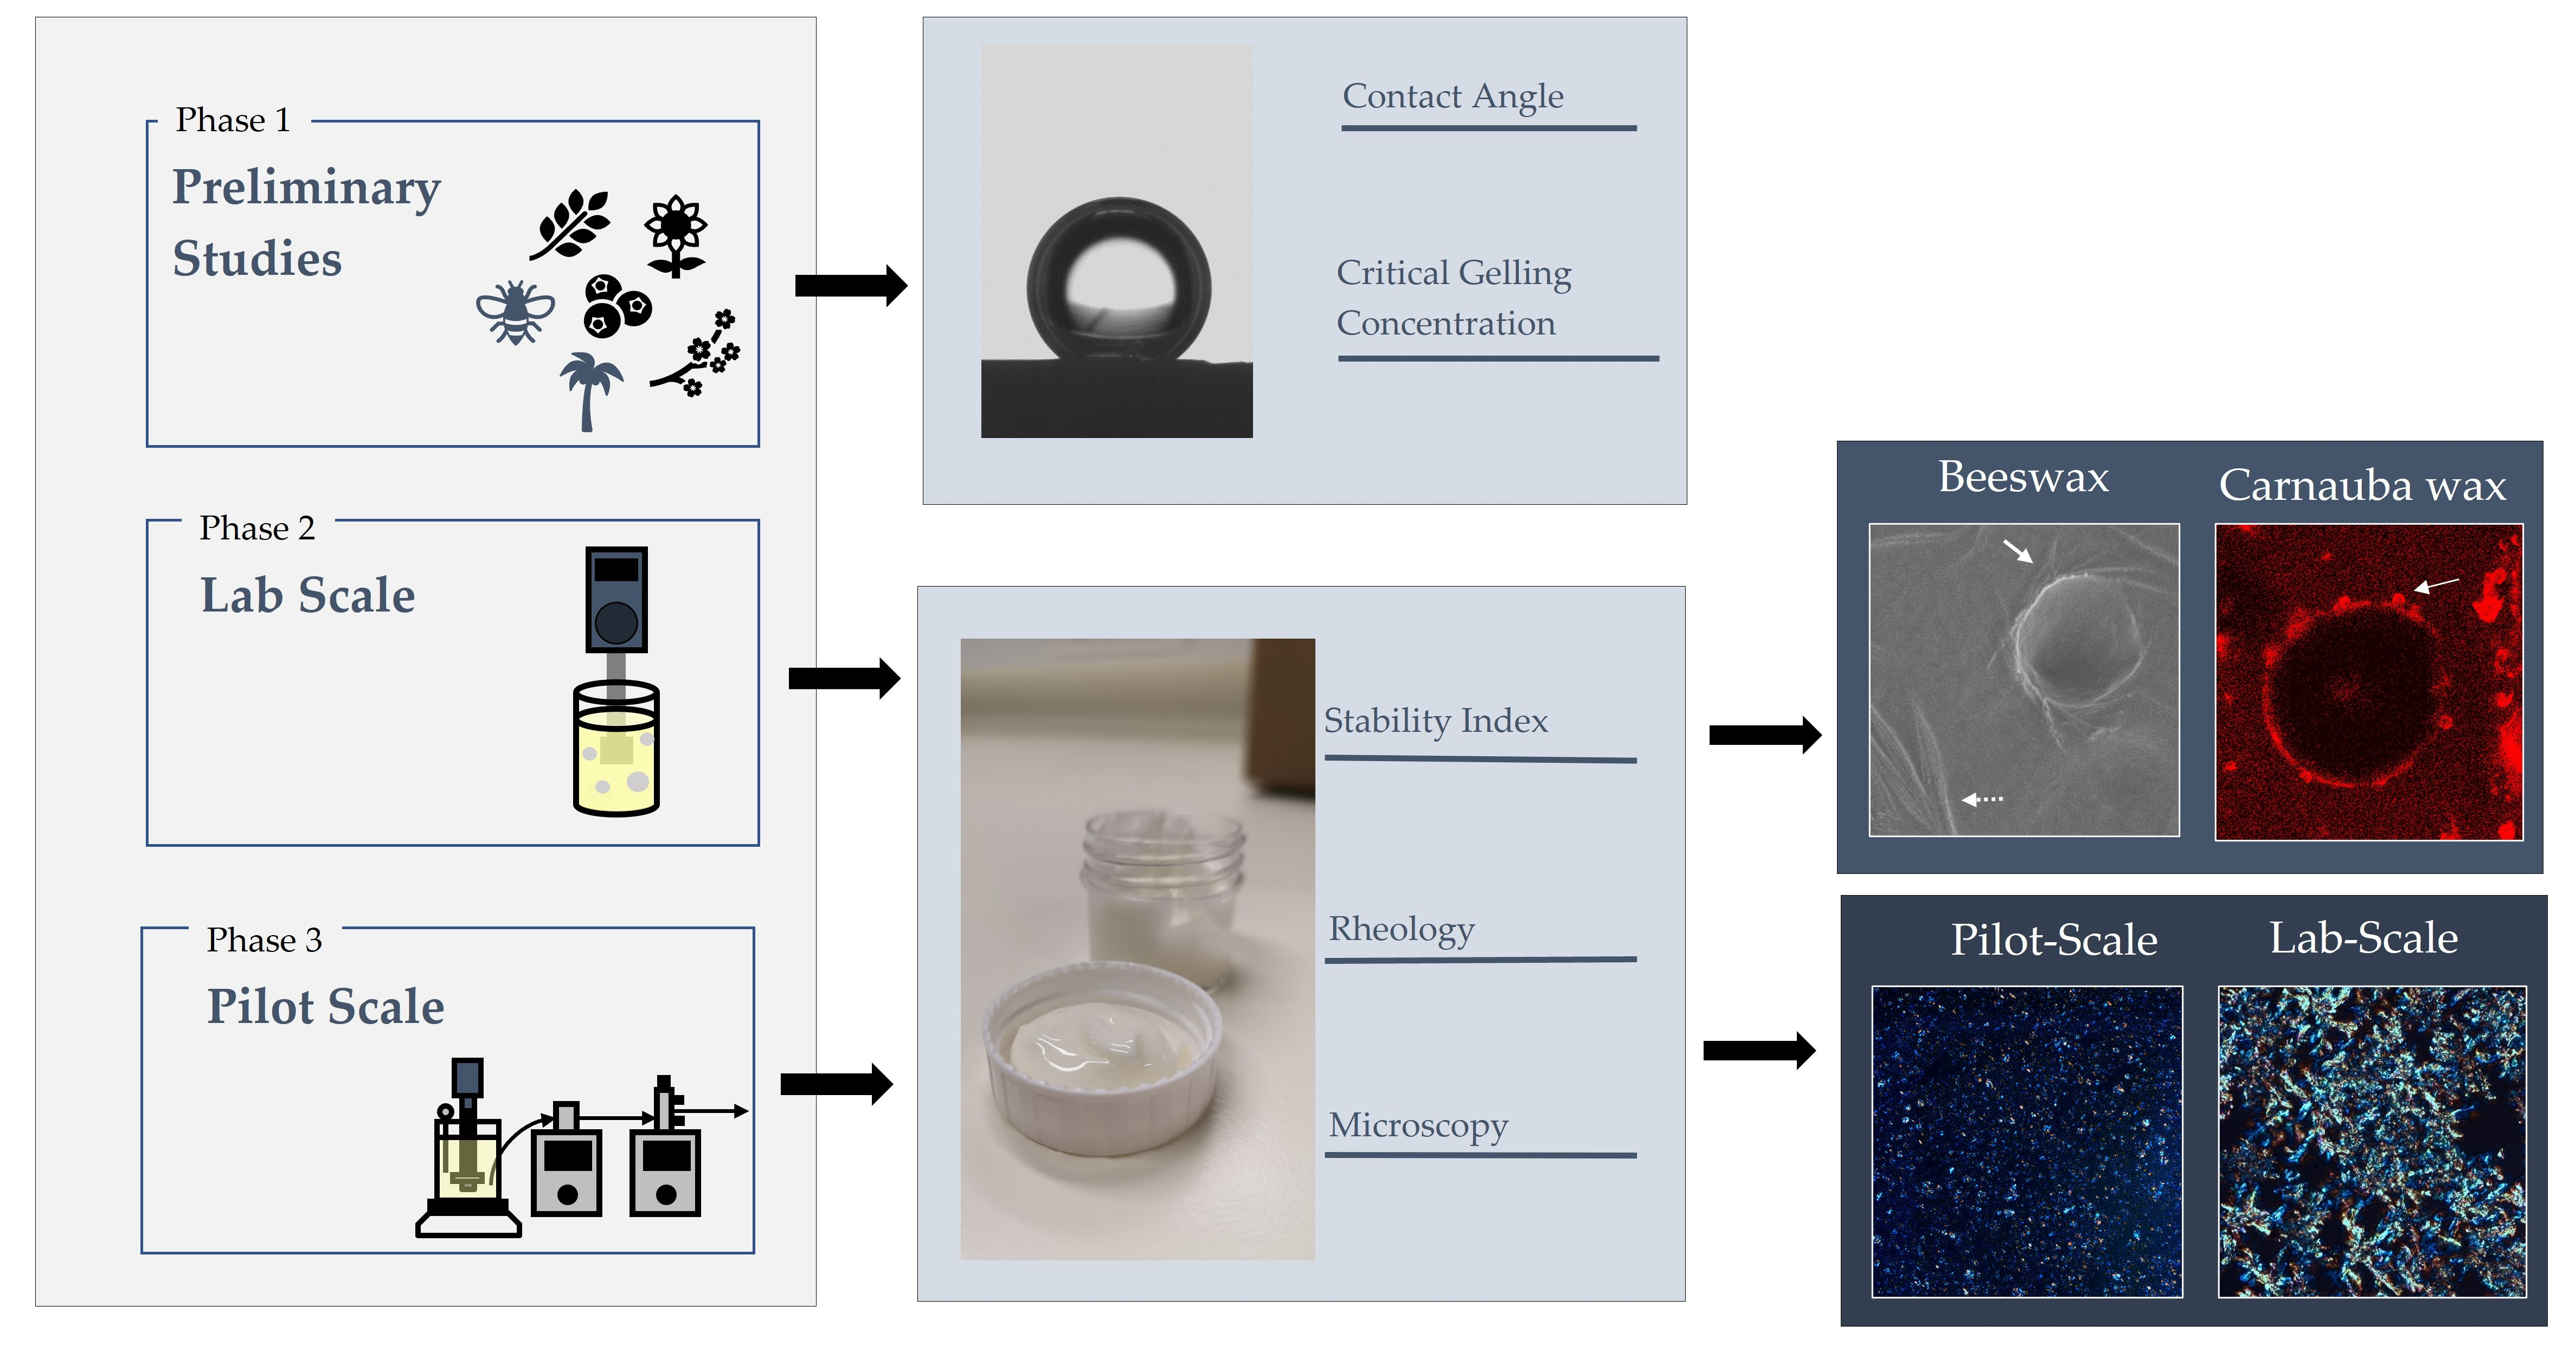 Carnauba wax emulsions for food contact applications Control slip